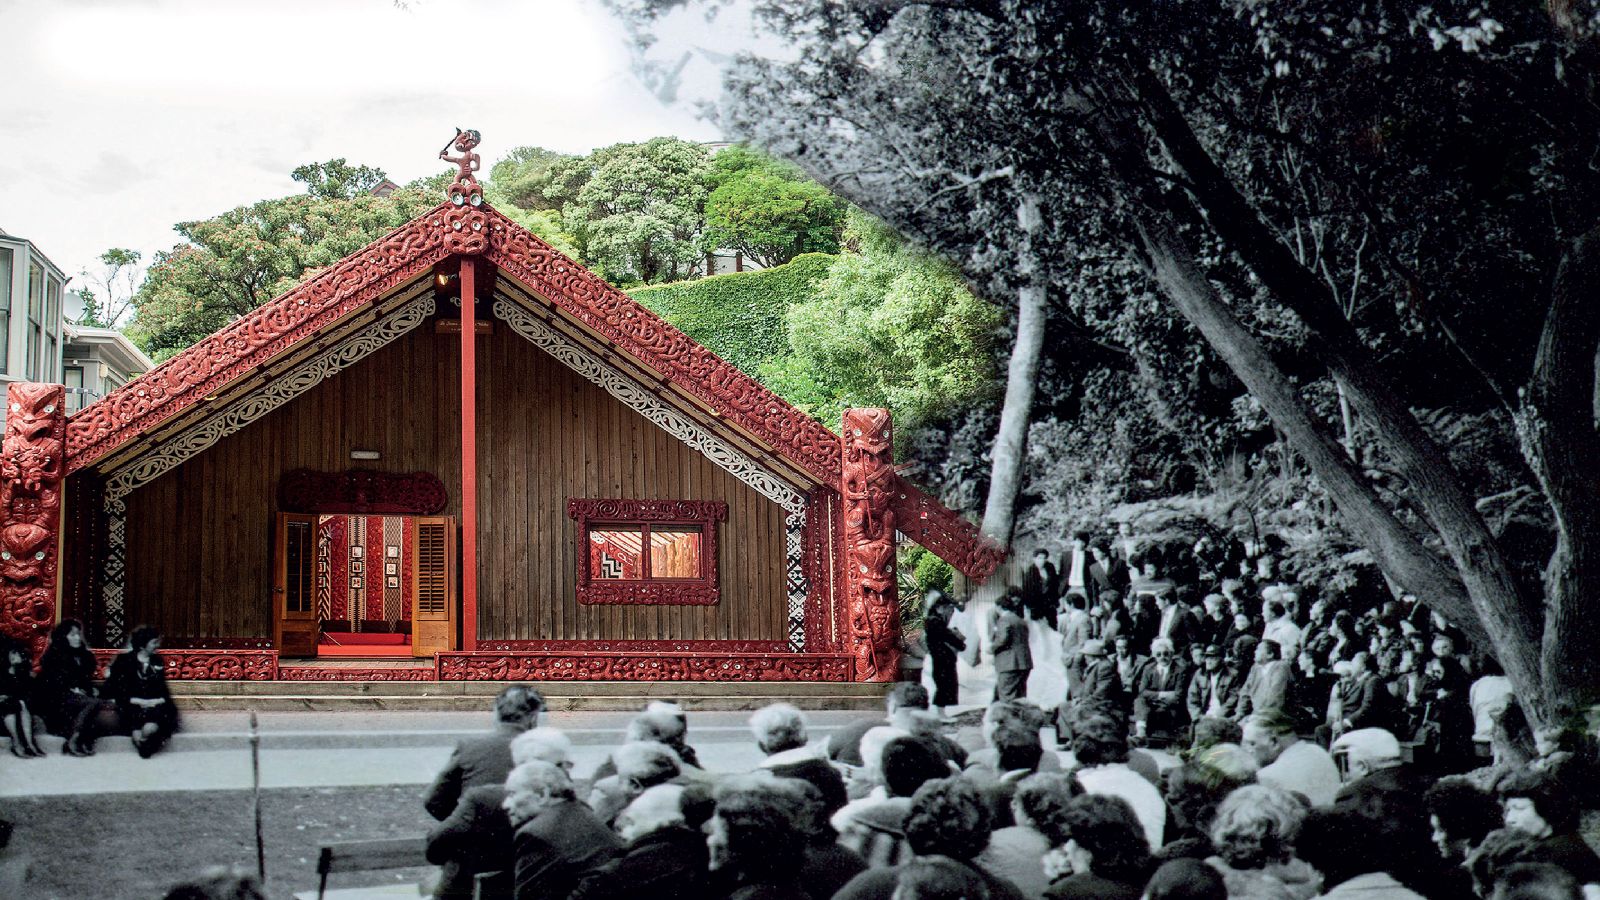 30 Years of Te Herenga Waka Marae